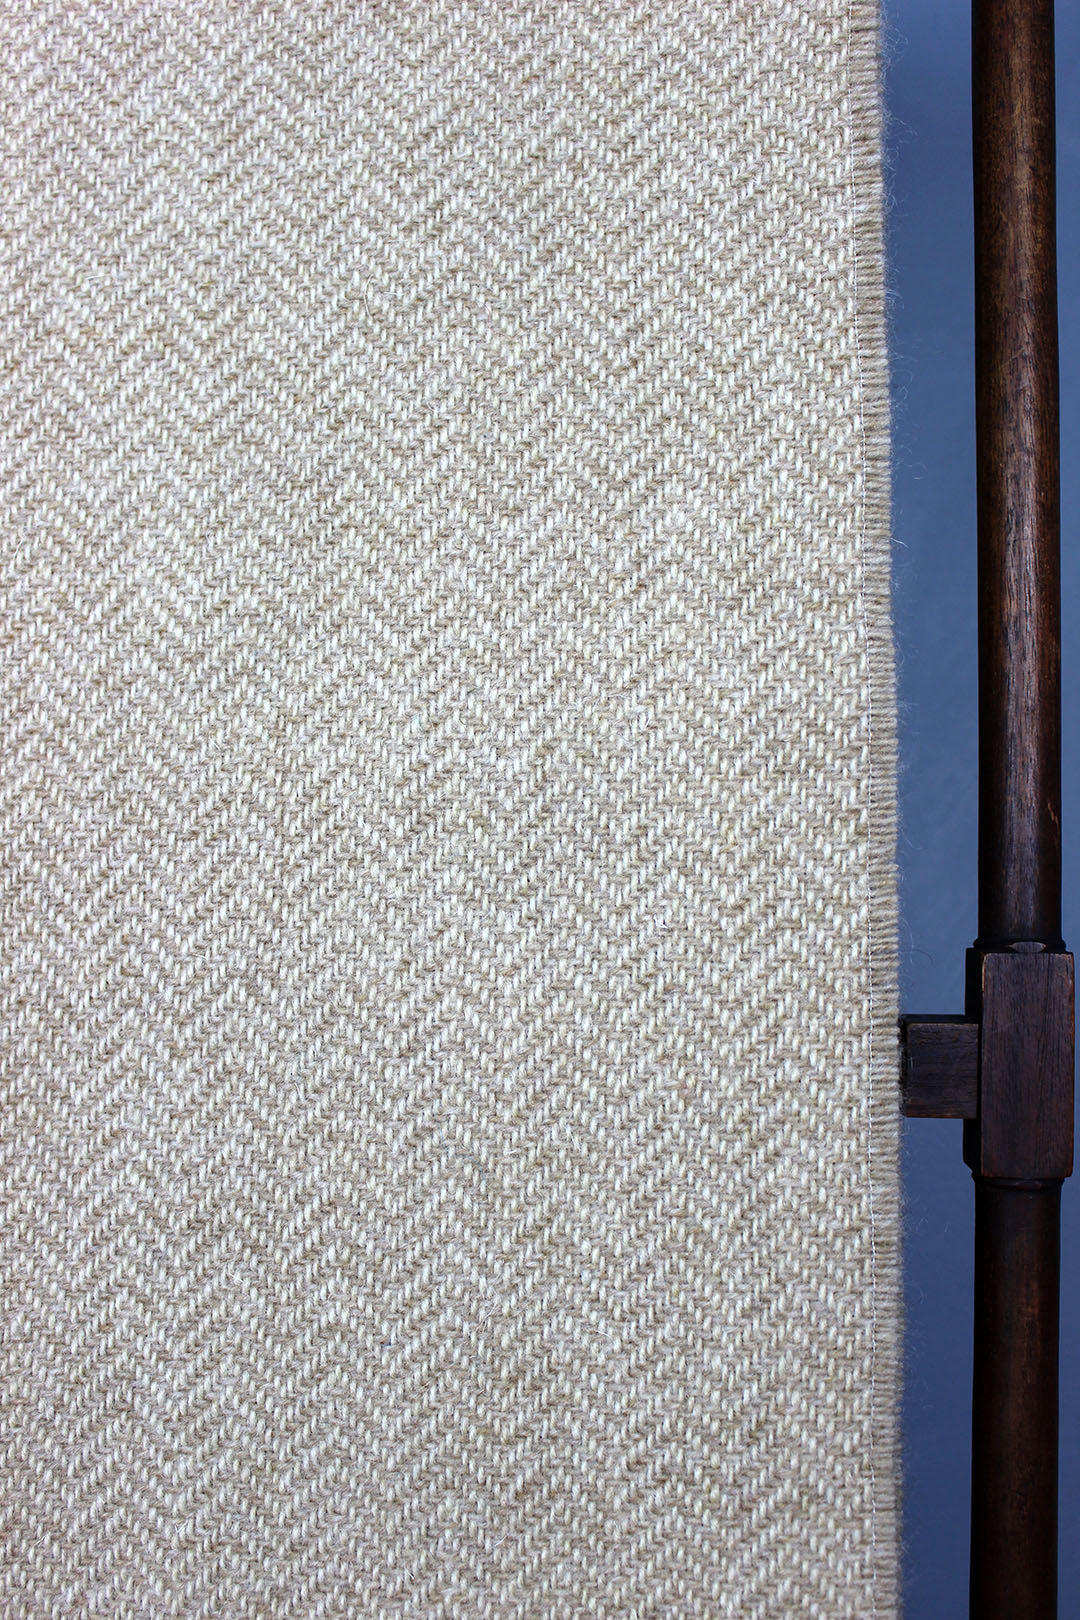 Wool chevron throw in oatmeal colourway.